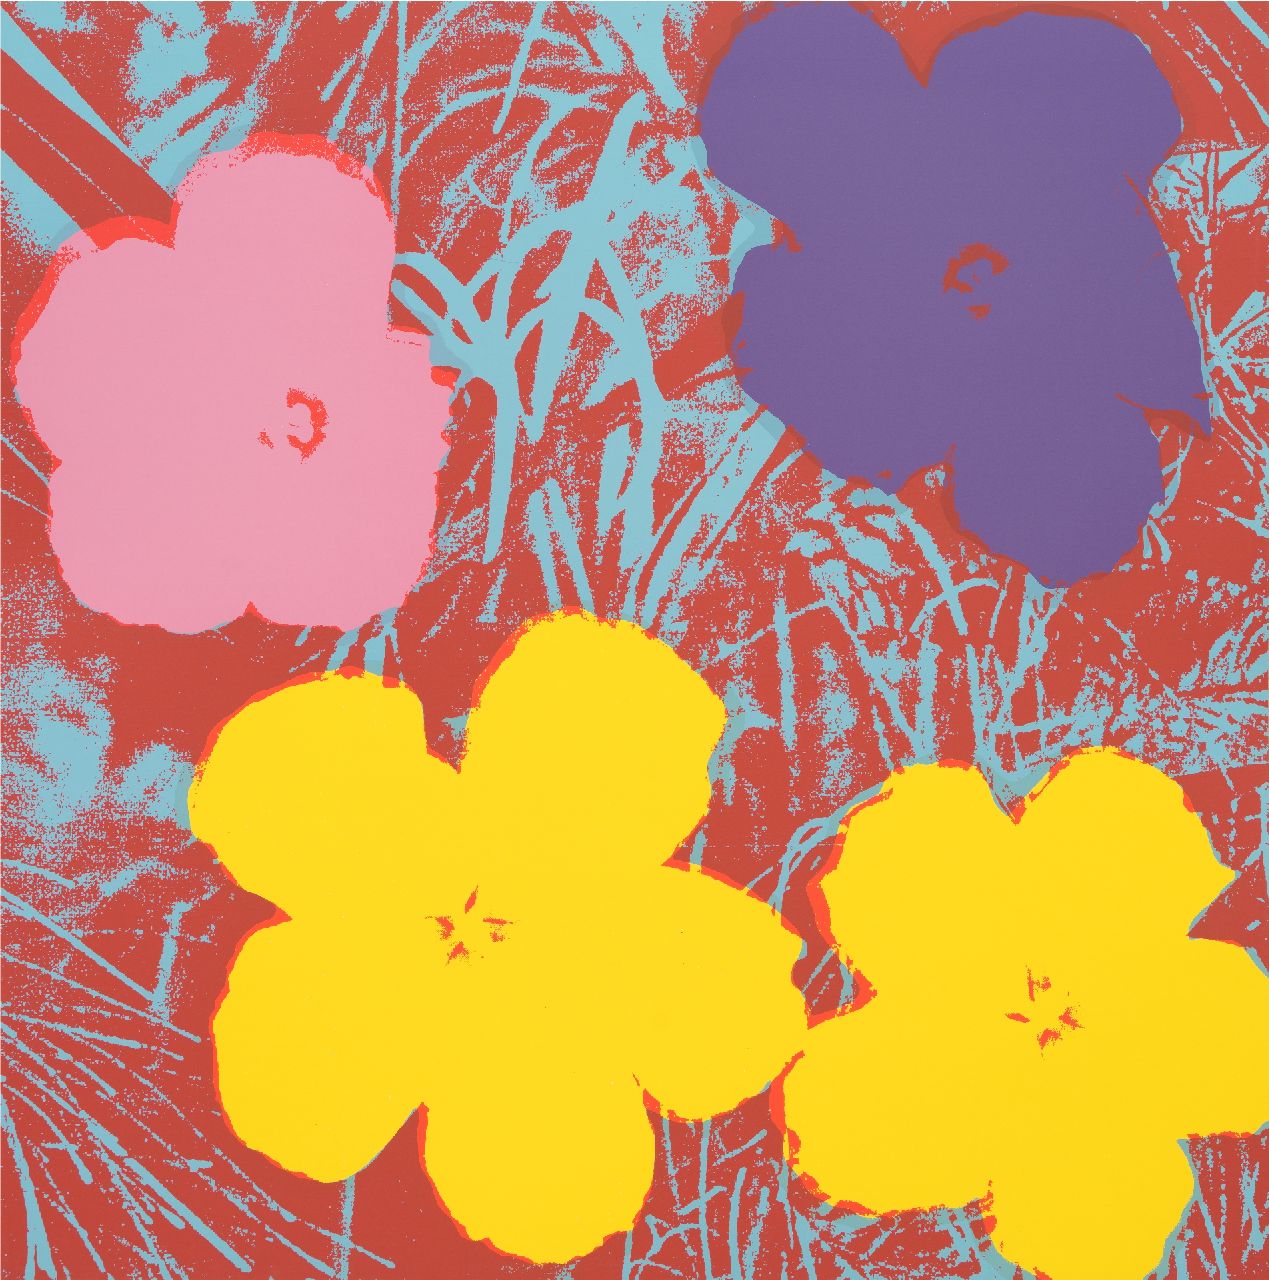 Naar Andy Warhol   | Naar Andy Warhol | Prints and Multiples offered for sale | Flowers, screenprint on paper 91.0 x 90.7 cm, prijs zonder lijst